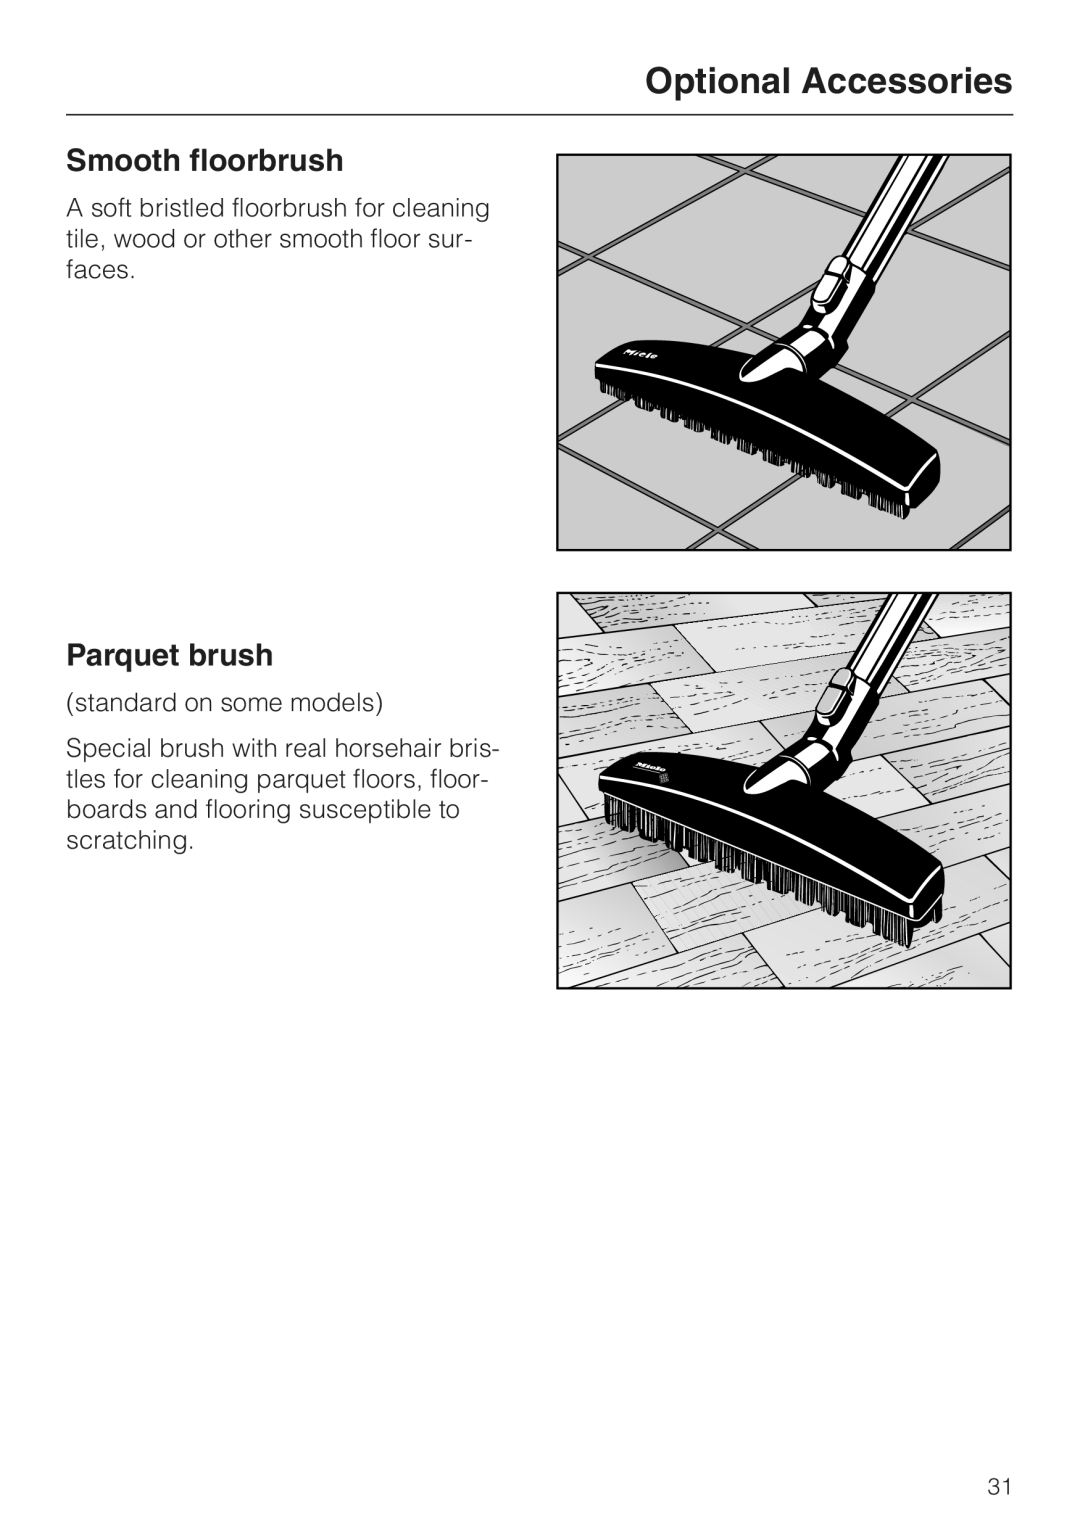 Miele S157 manual Smooth floorbrush, Parquet brush, Optional Accessories 